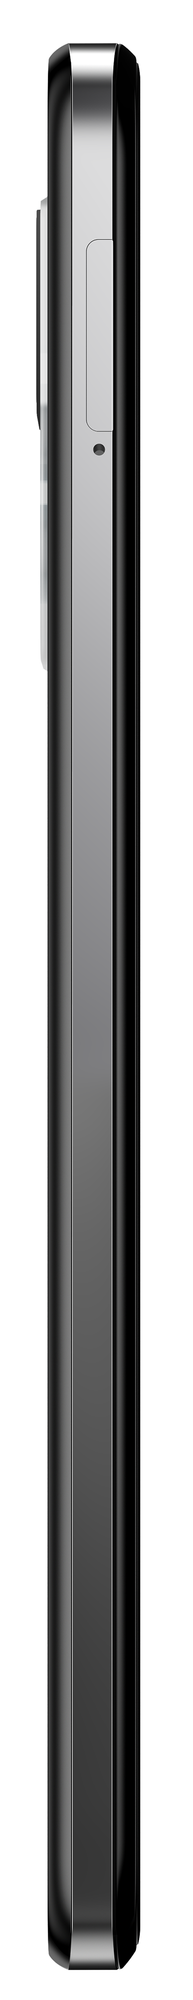 Смартфон TCL 30 64ГБ, черный (t676h_black) (плохая упаковка) - фото №6